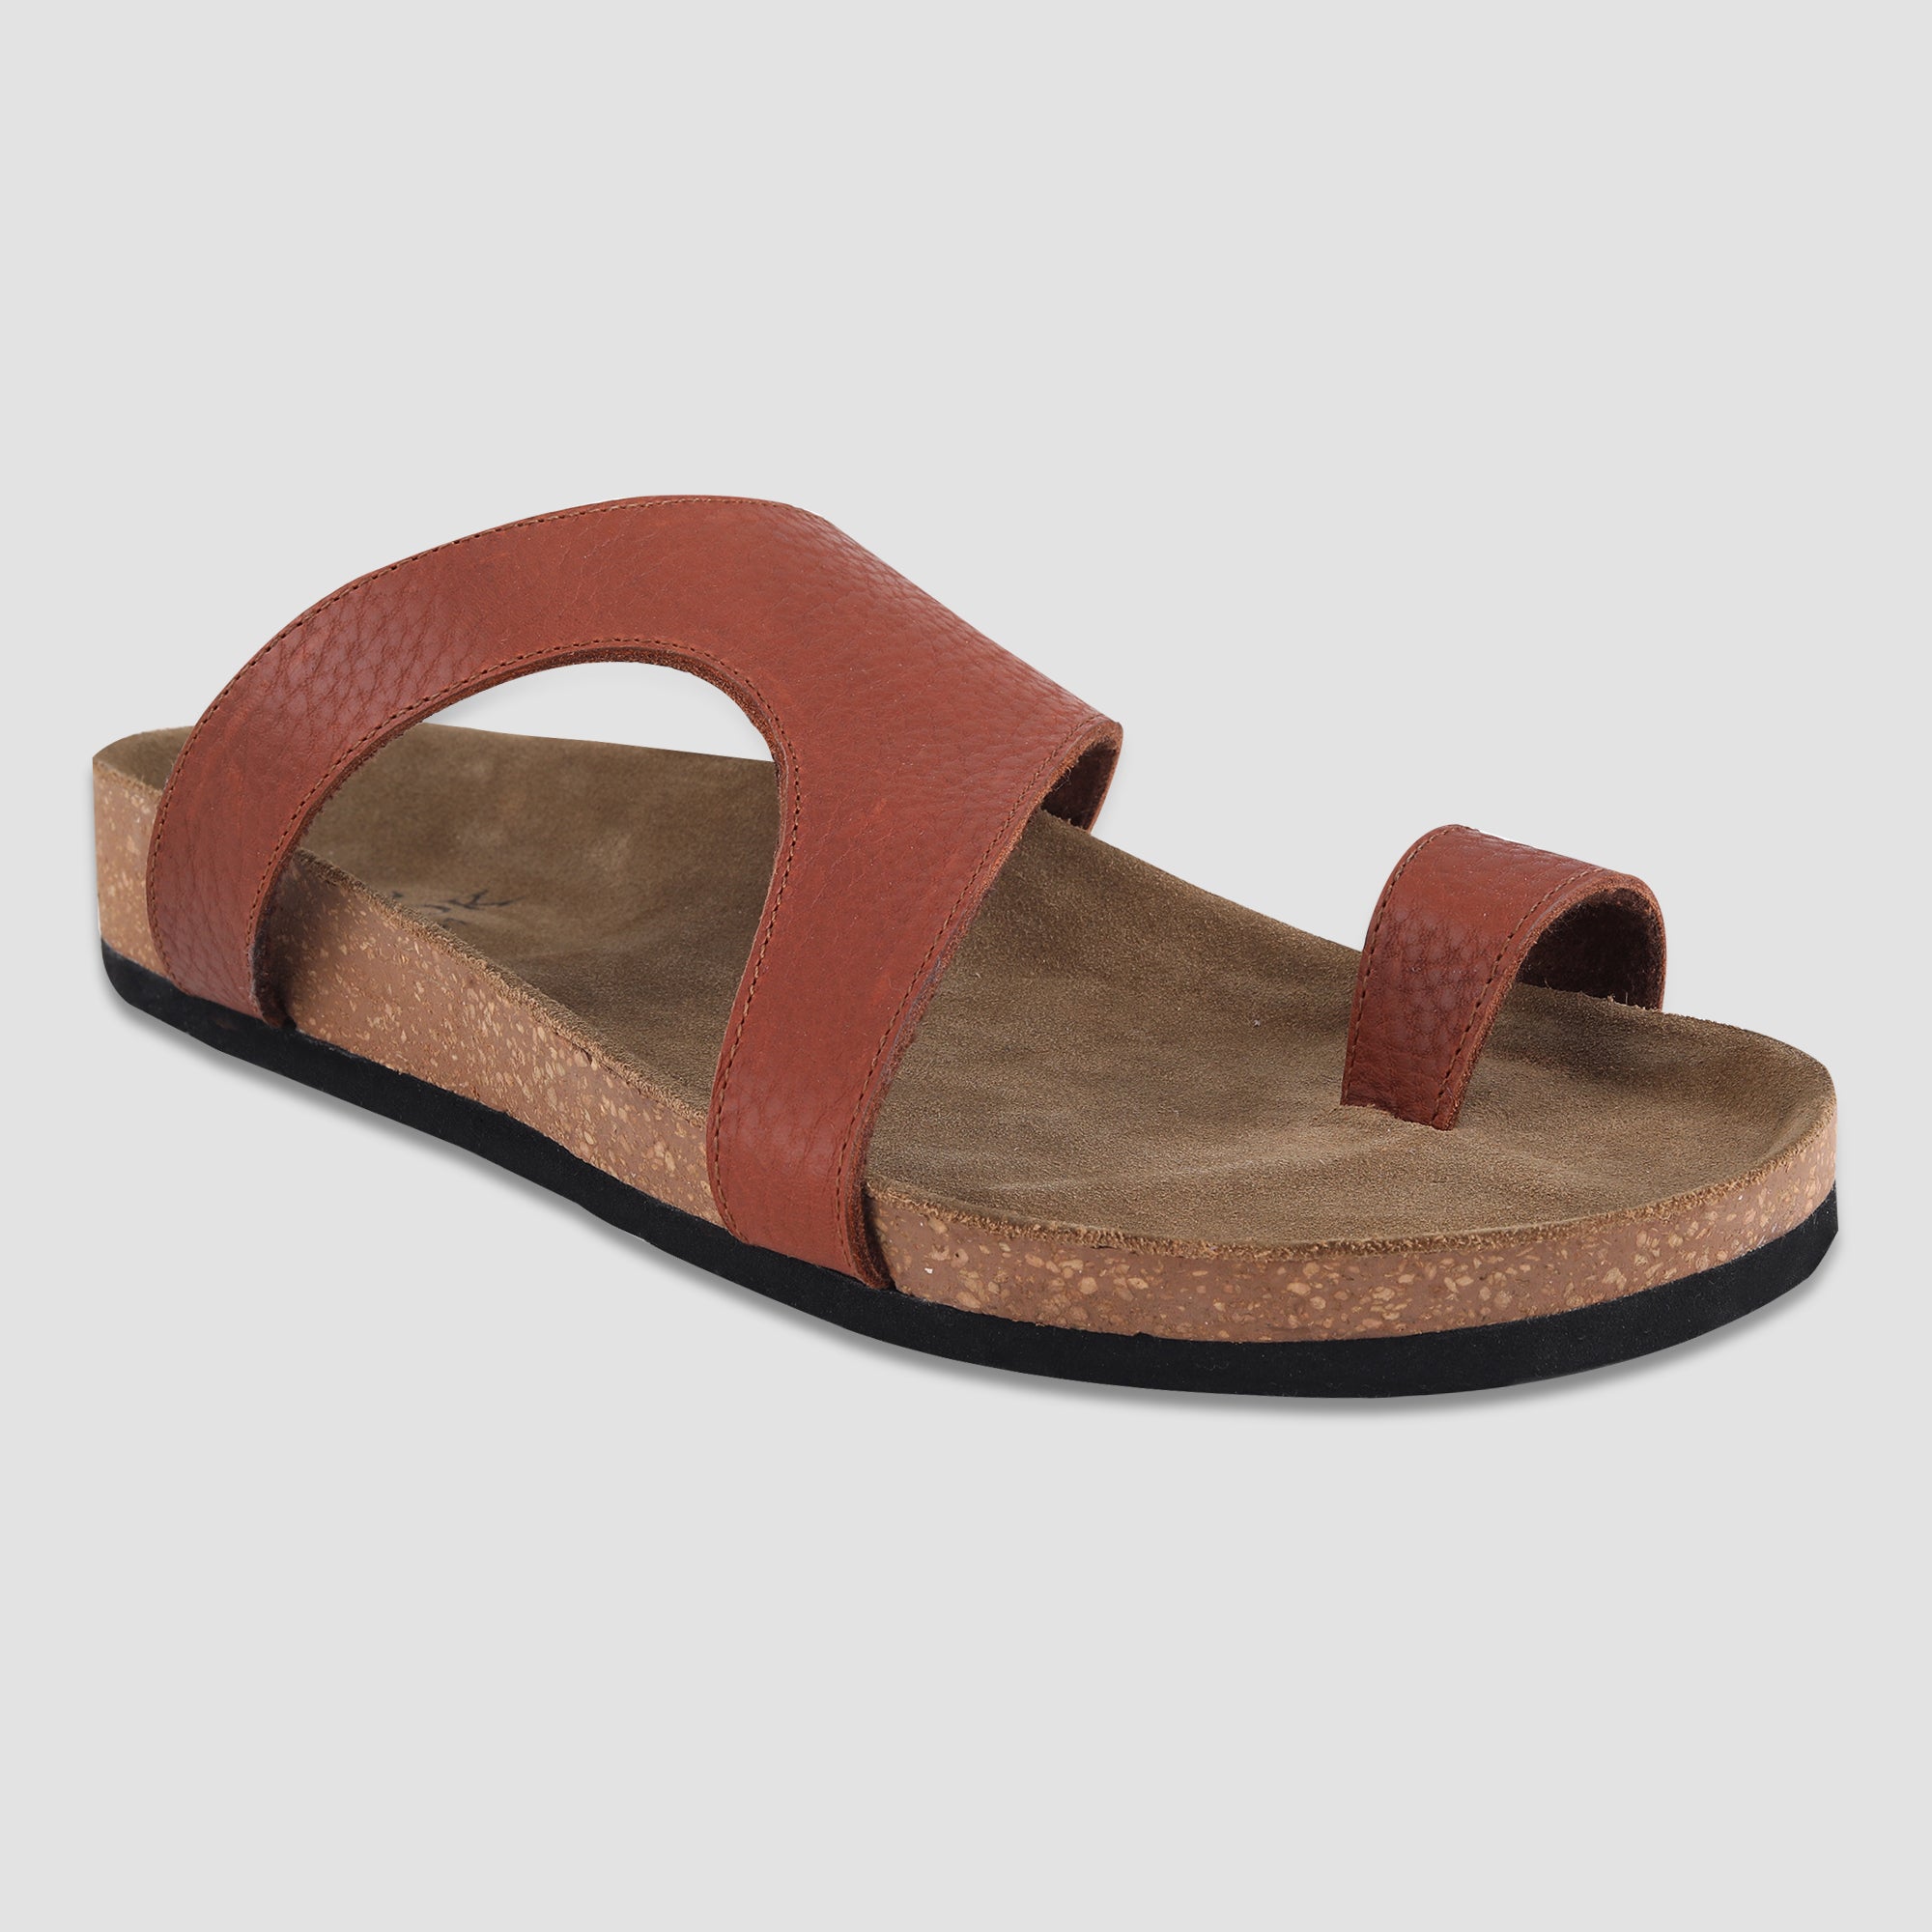 Ezok Tan Leather Sandal For Men